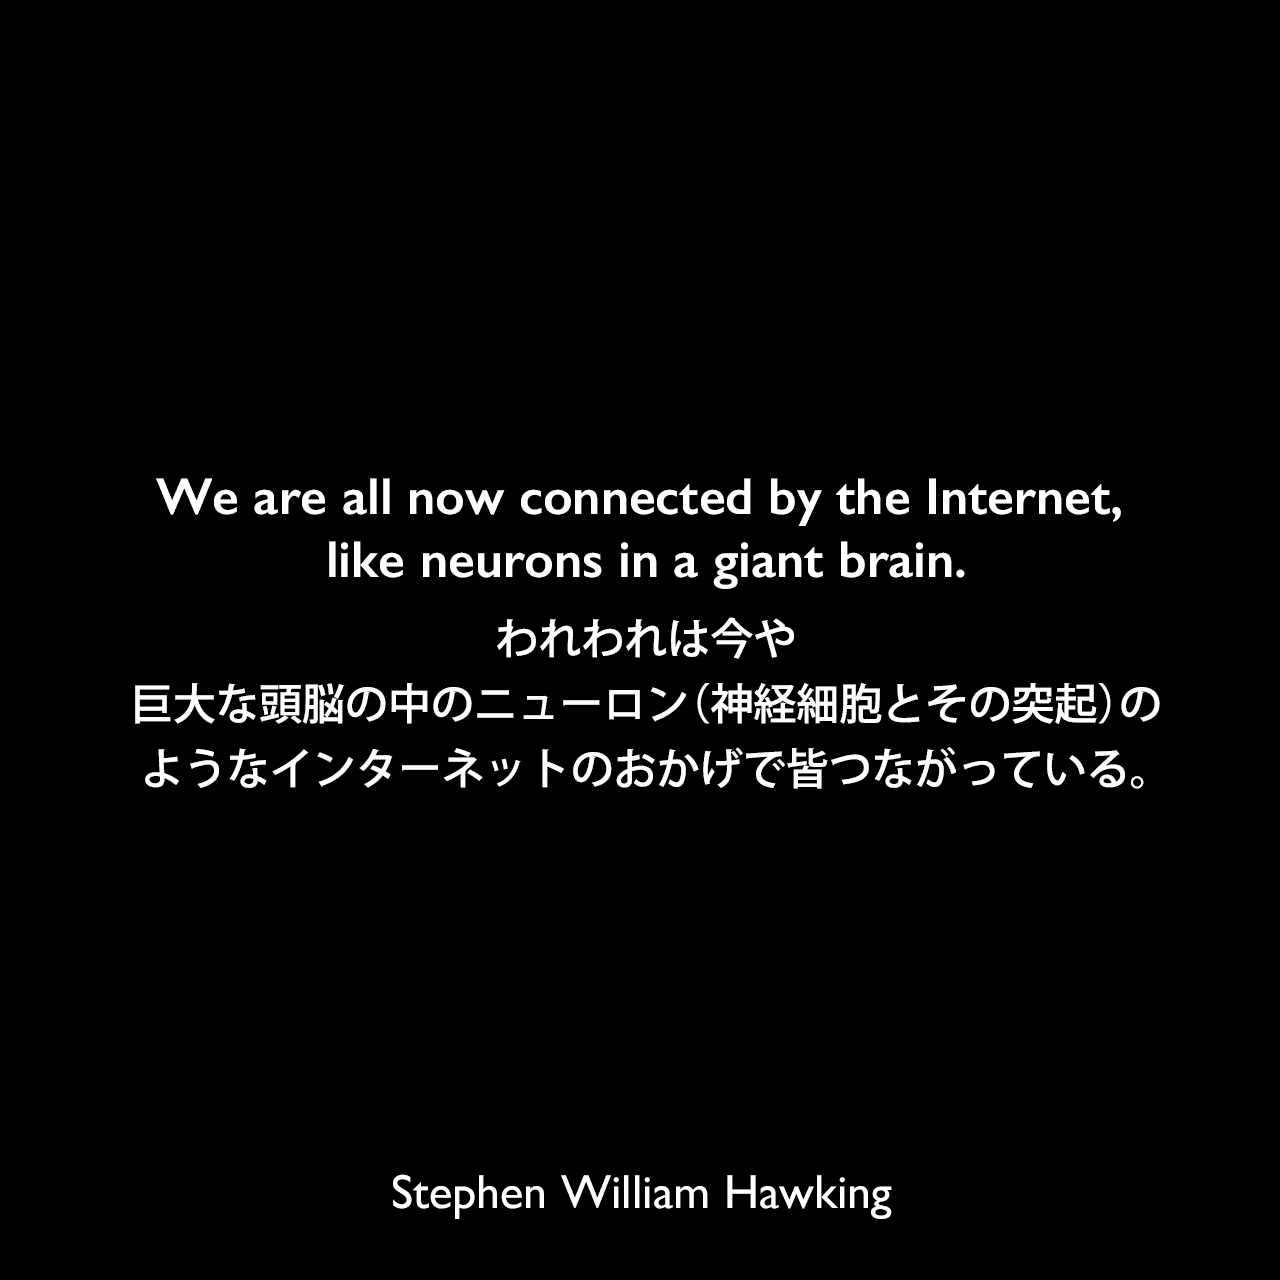 We are all now connected by the Internet, like neurons in a giant brain.われわれは今や、巨大な頭脳の中のニューロン（神経細胞とその突起）のようなインターネットのおかげで皆つながっている。Stephen William Hawking